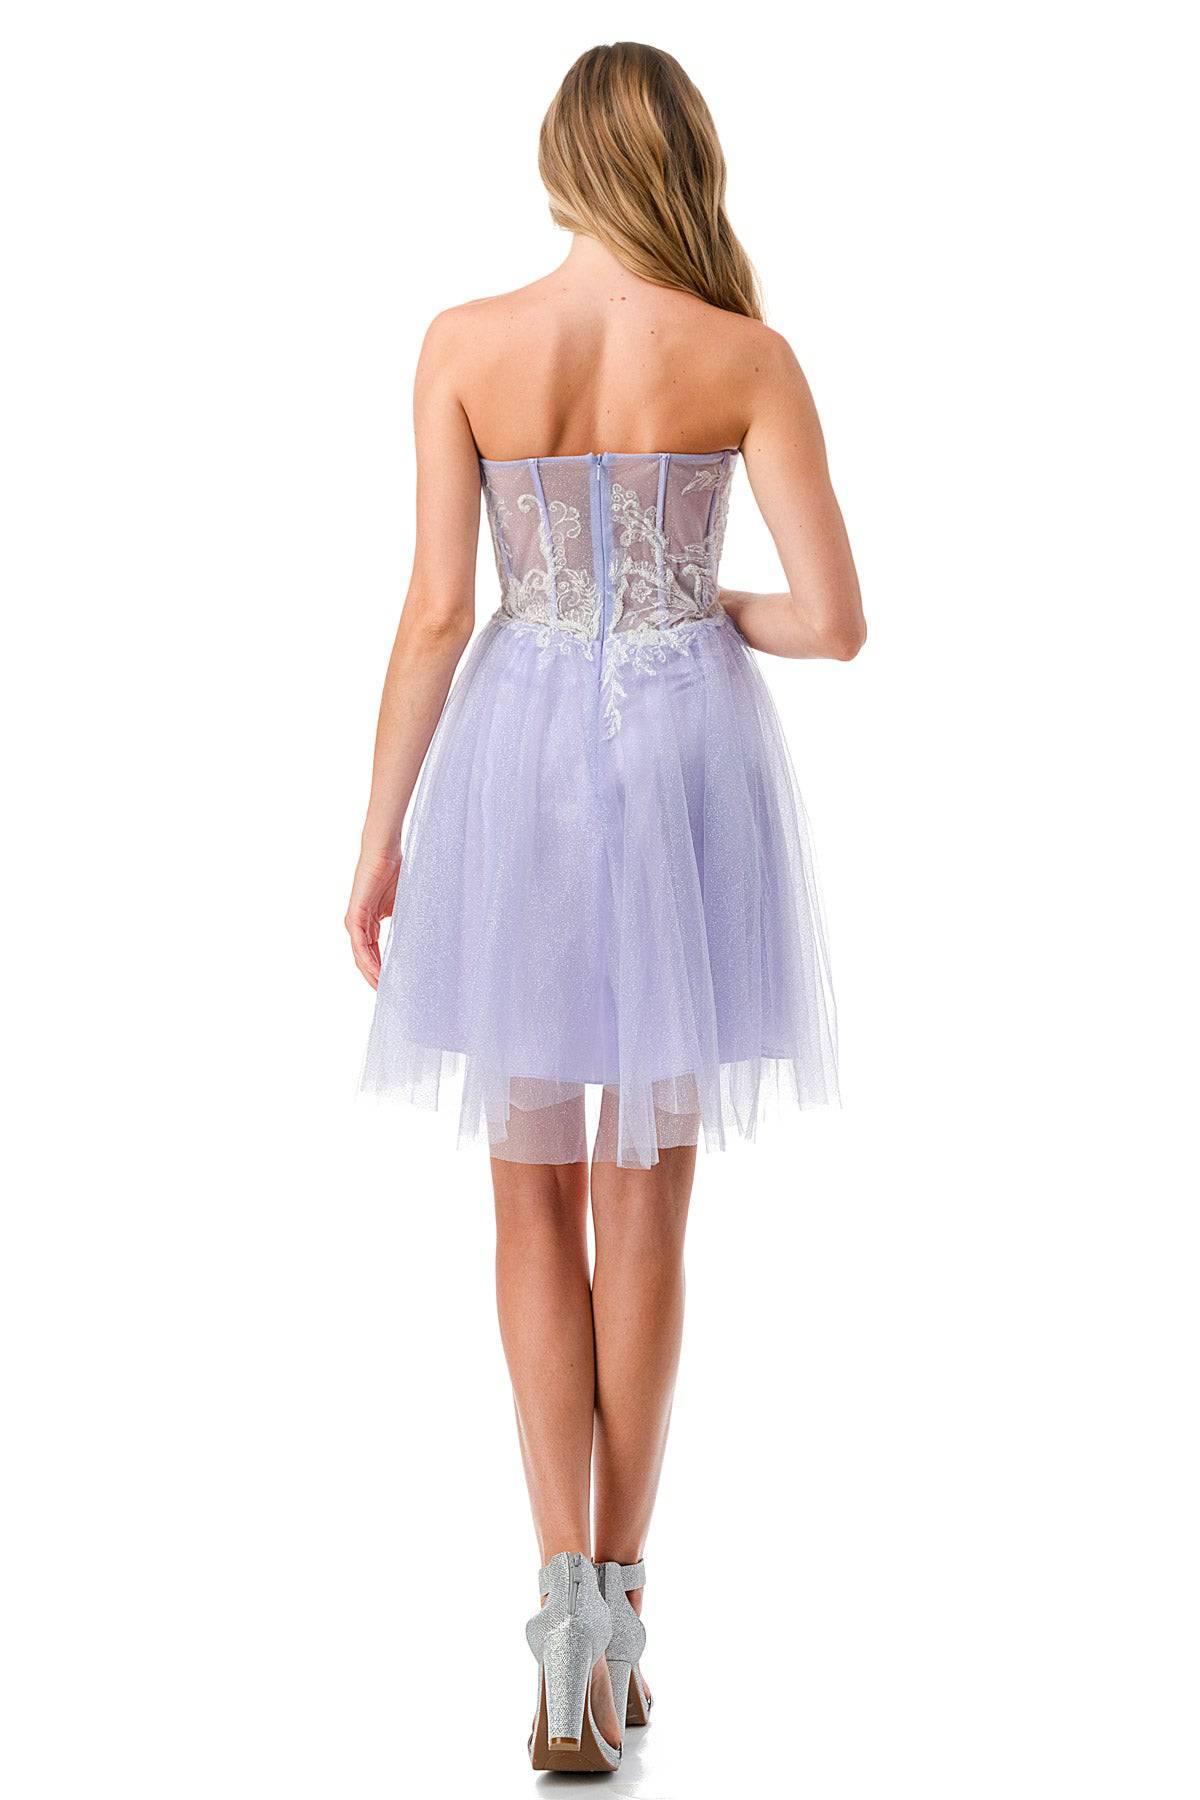 Aspeed S2745B Shimmering Corset Short Dress - NORMA REED